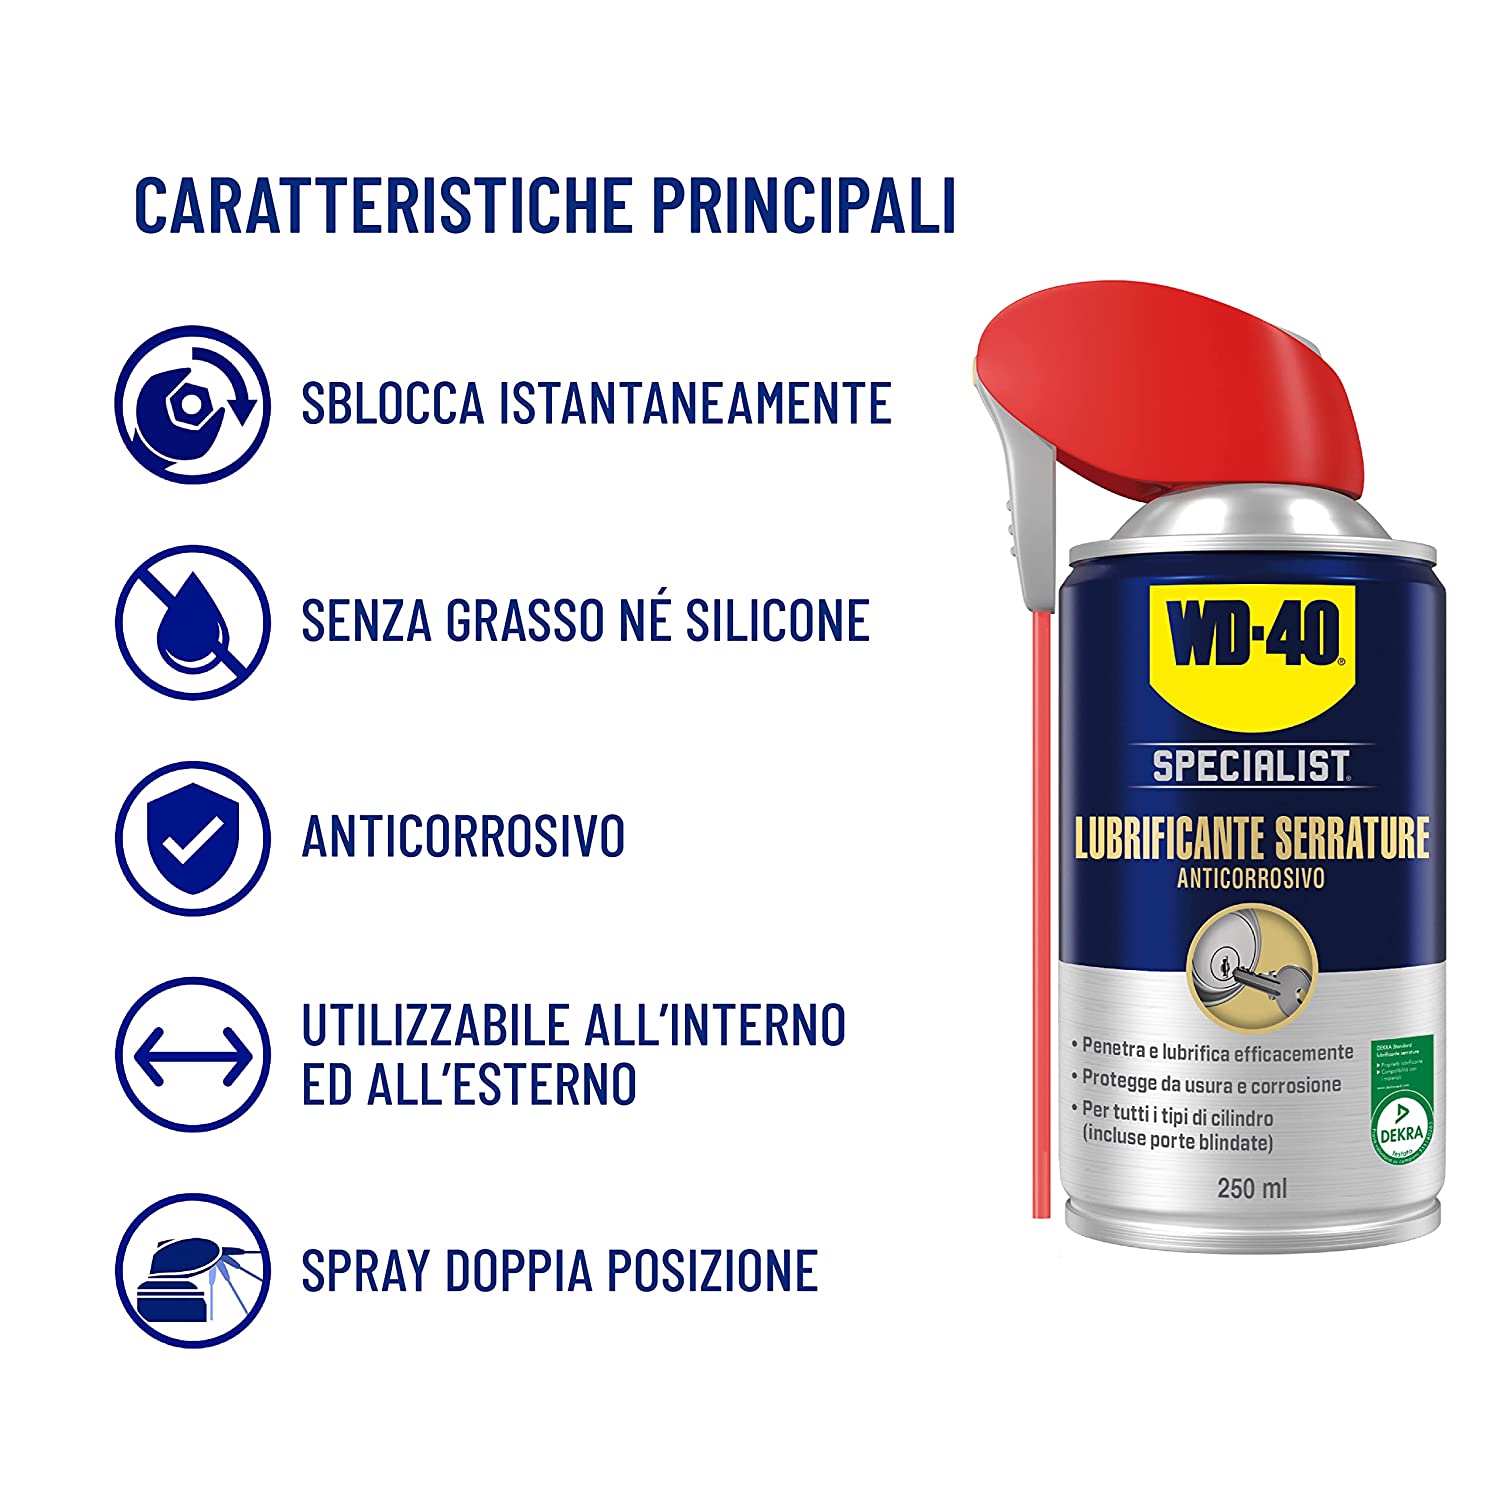 WD40 Specialist lubrificante spray serrature anticorrosivo ml250 - Cod.  39308 - ToolShop Italia